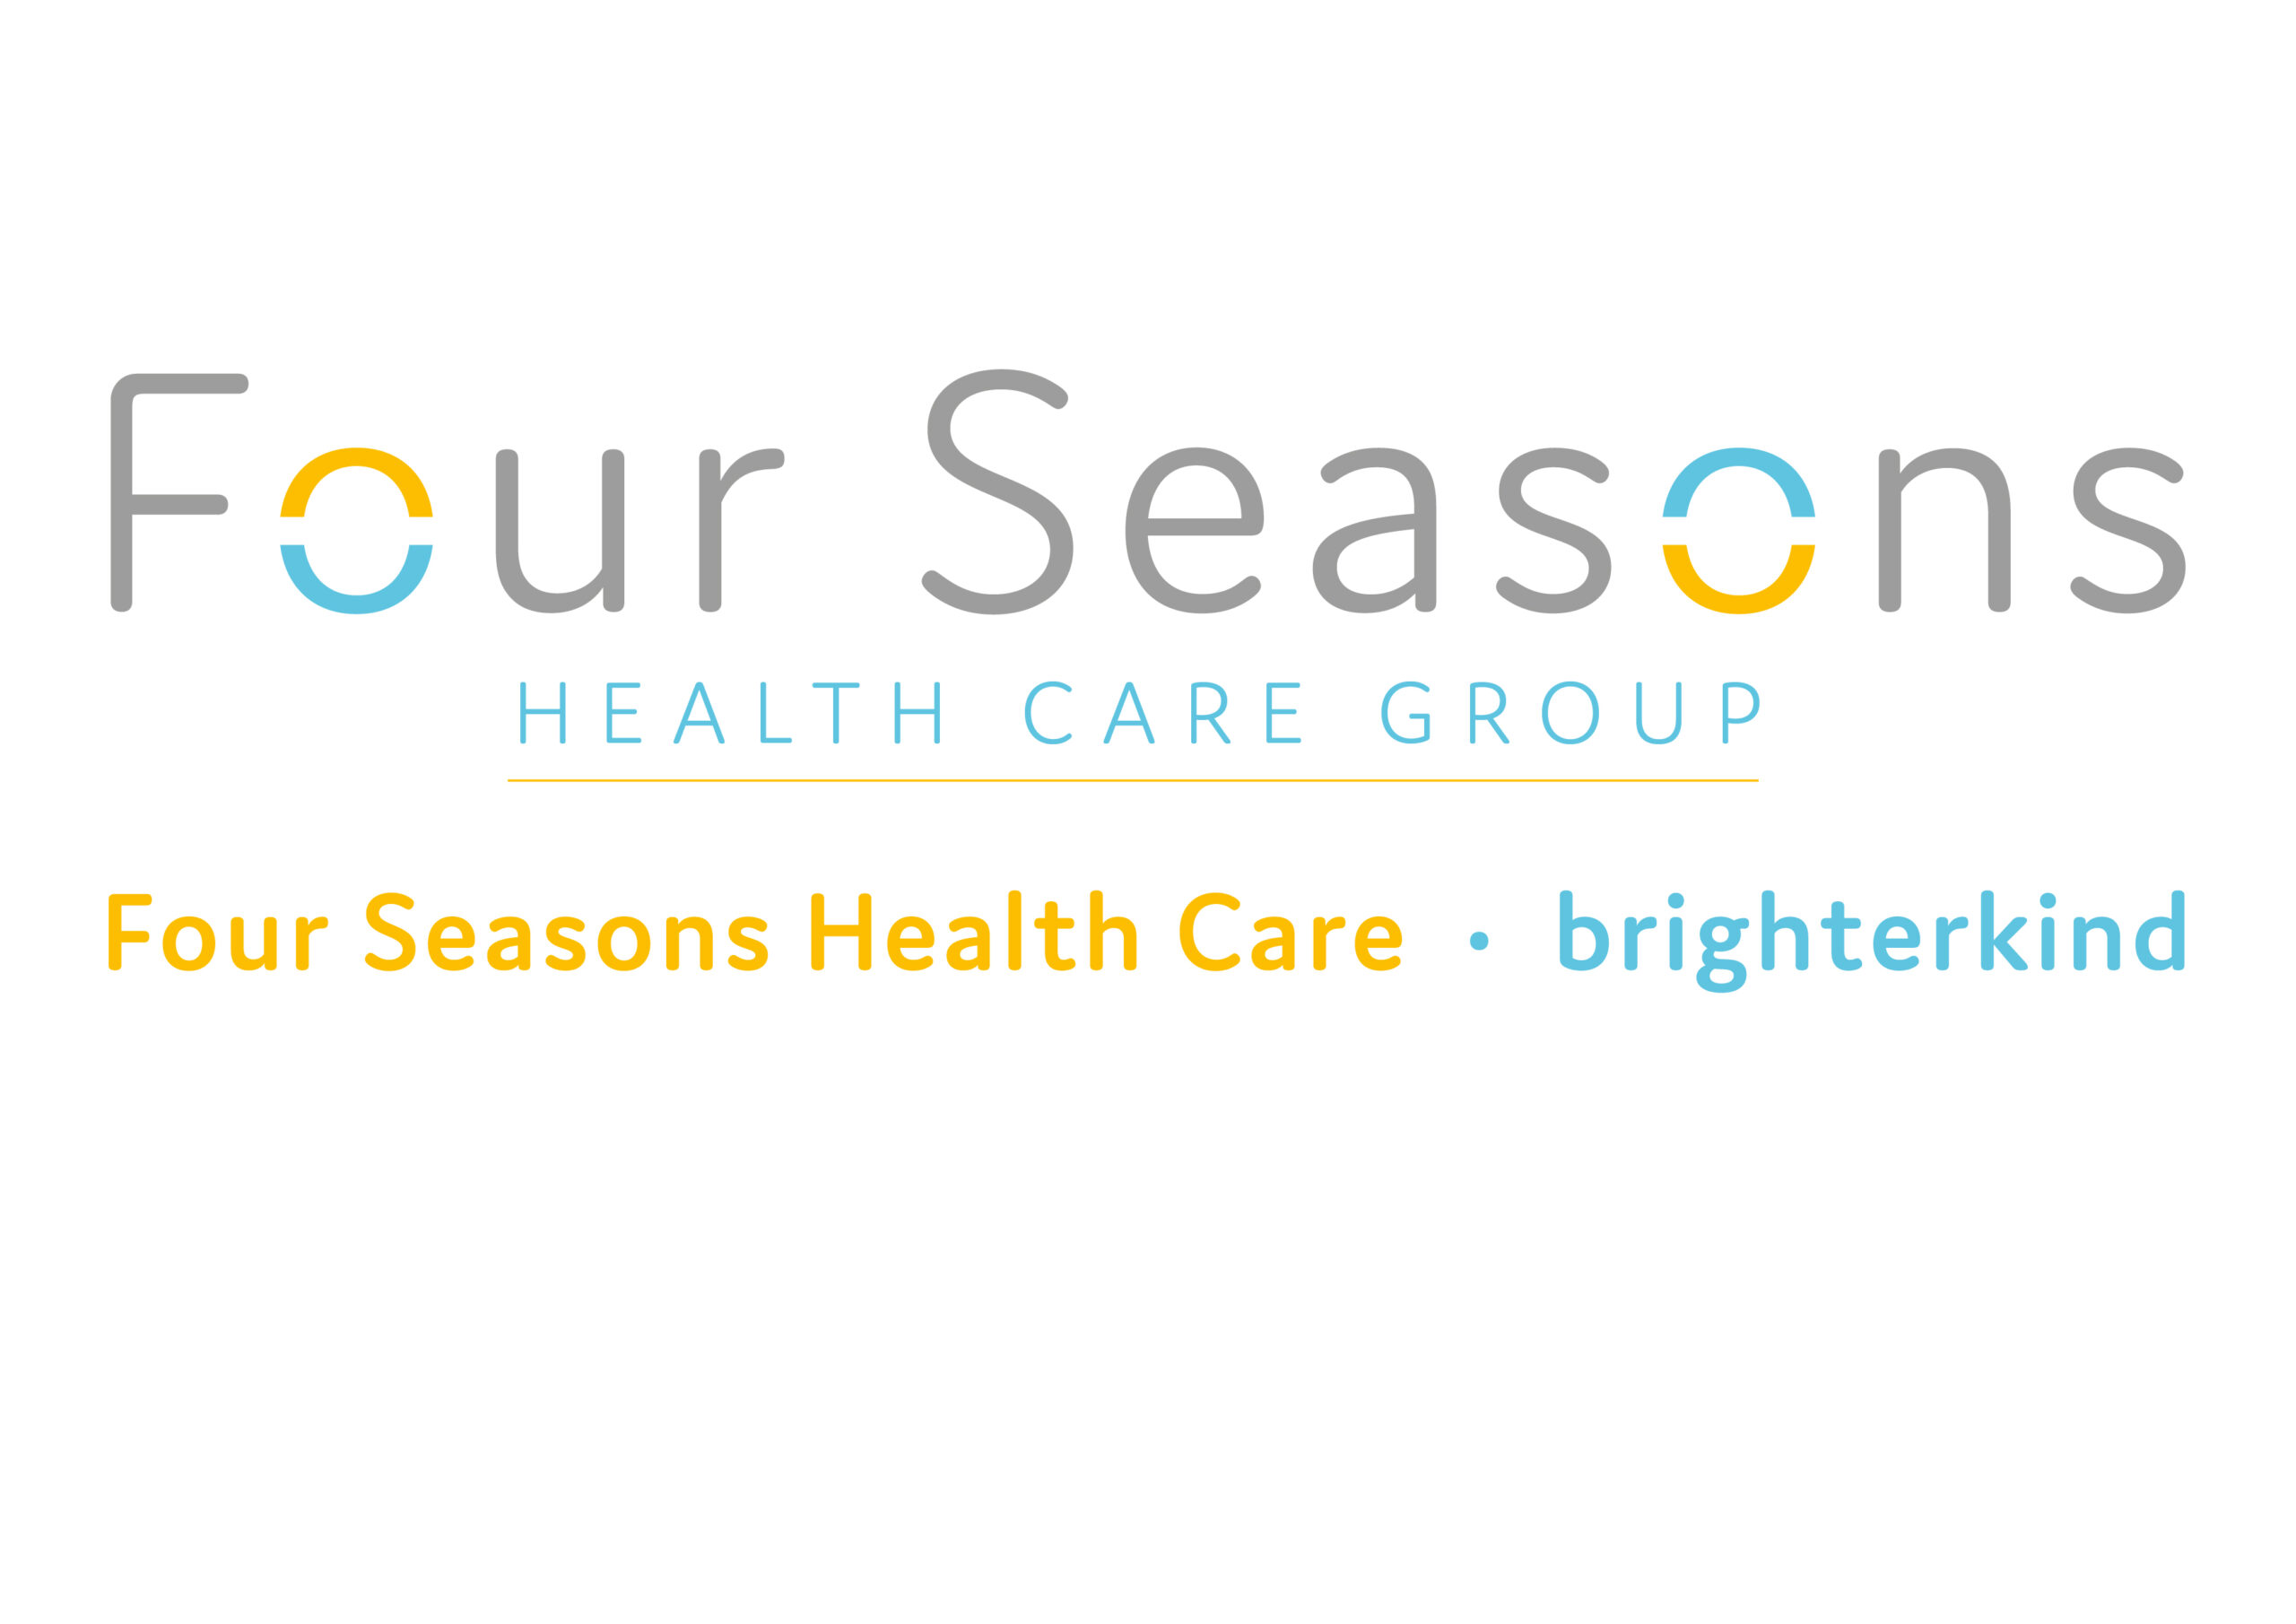 Four Seasons Health Care Group